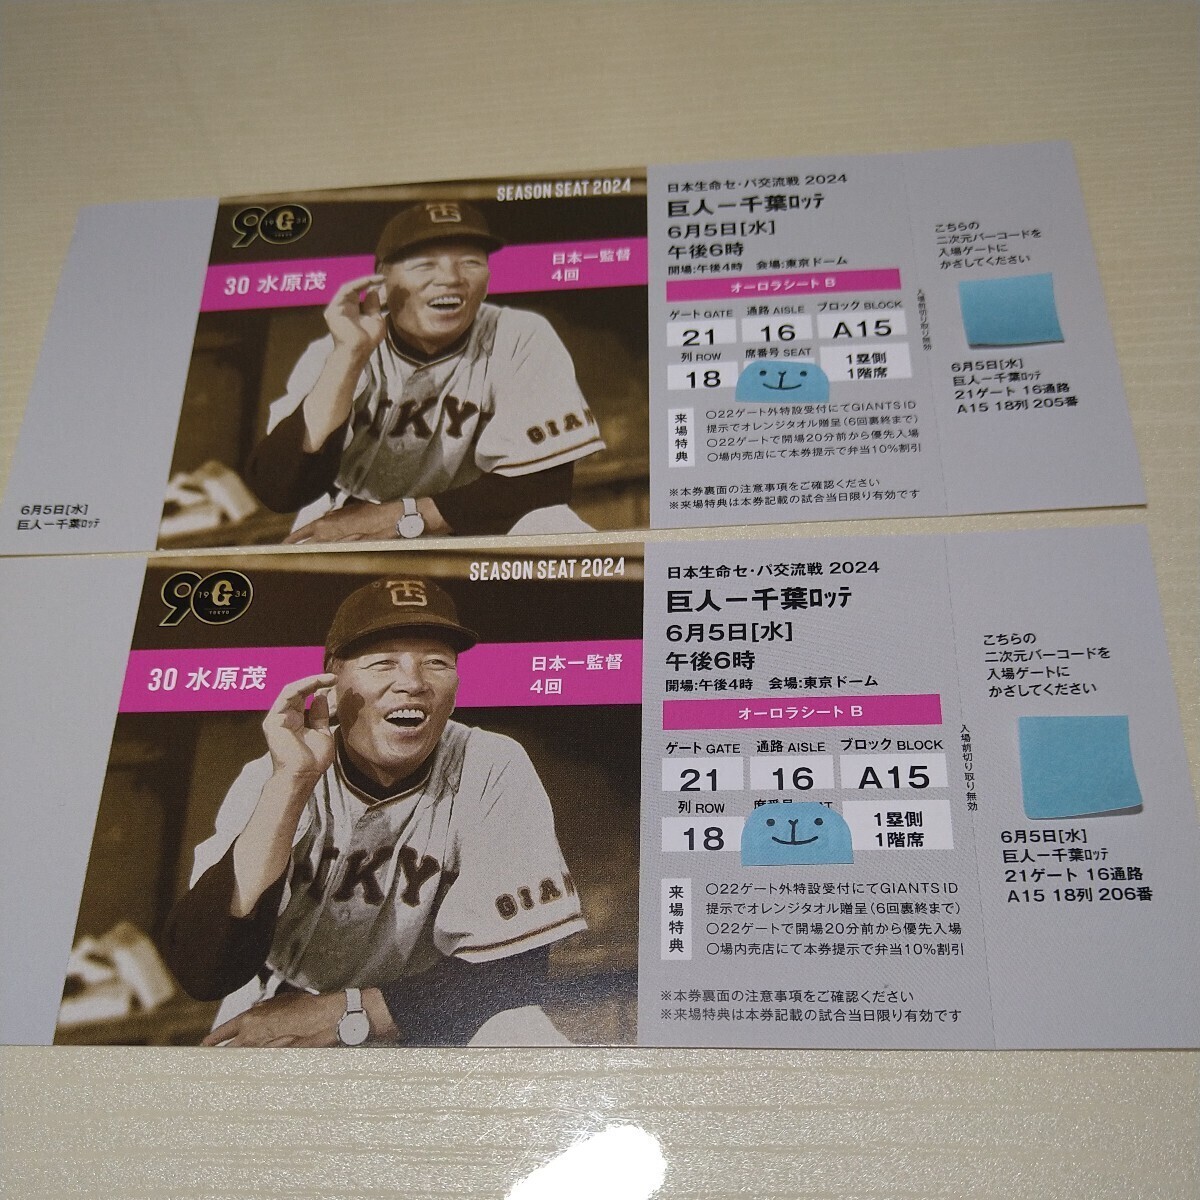  Tokyo Dome . битва билет 2 листов . человек - Chiba Lotte 2024.6.5( вода ) после полудня 6 час 